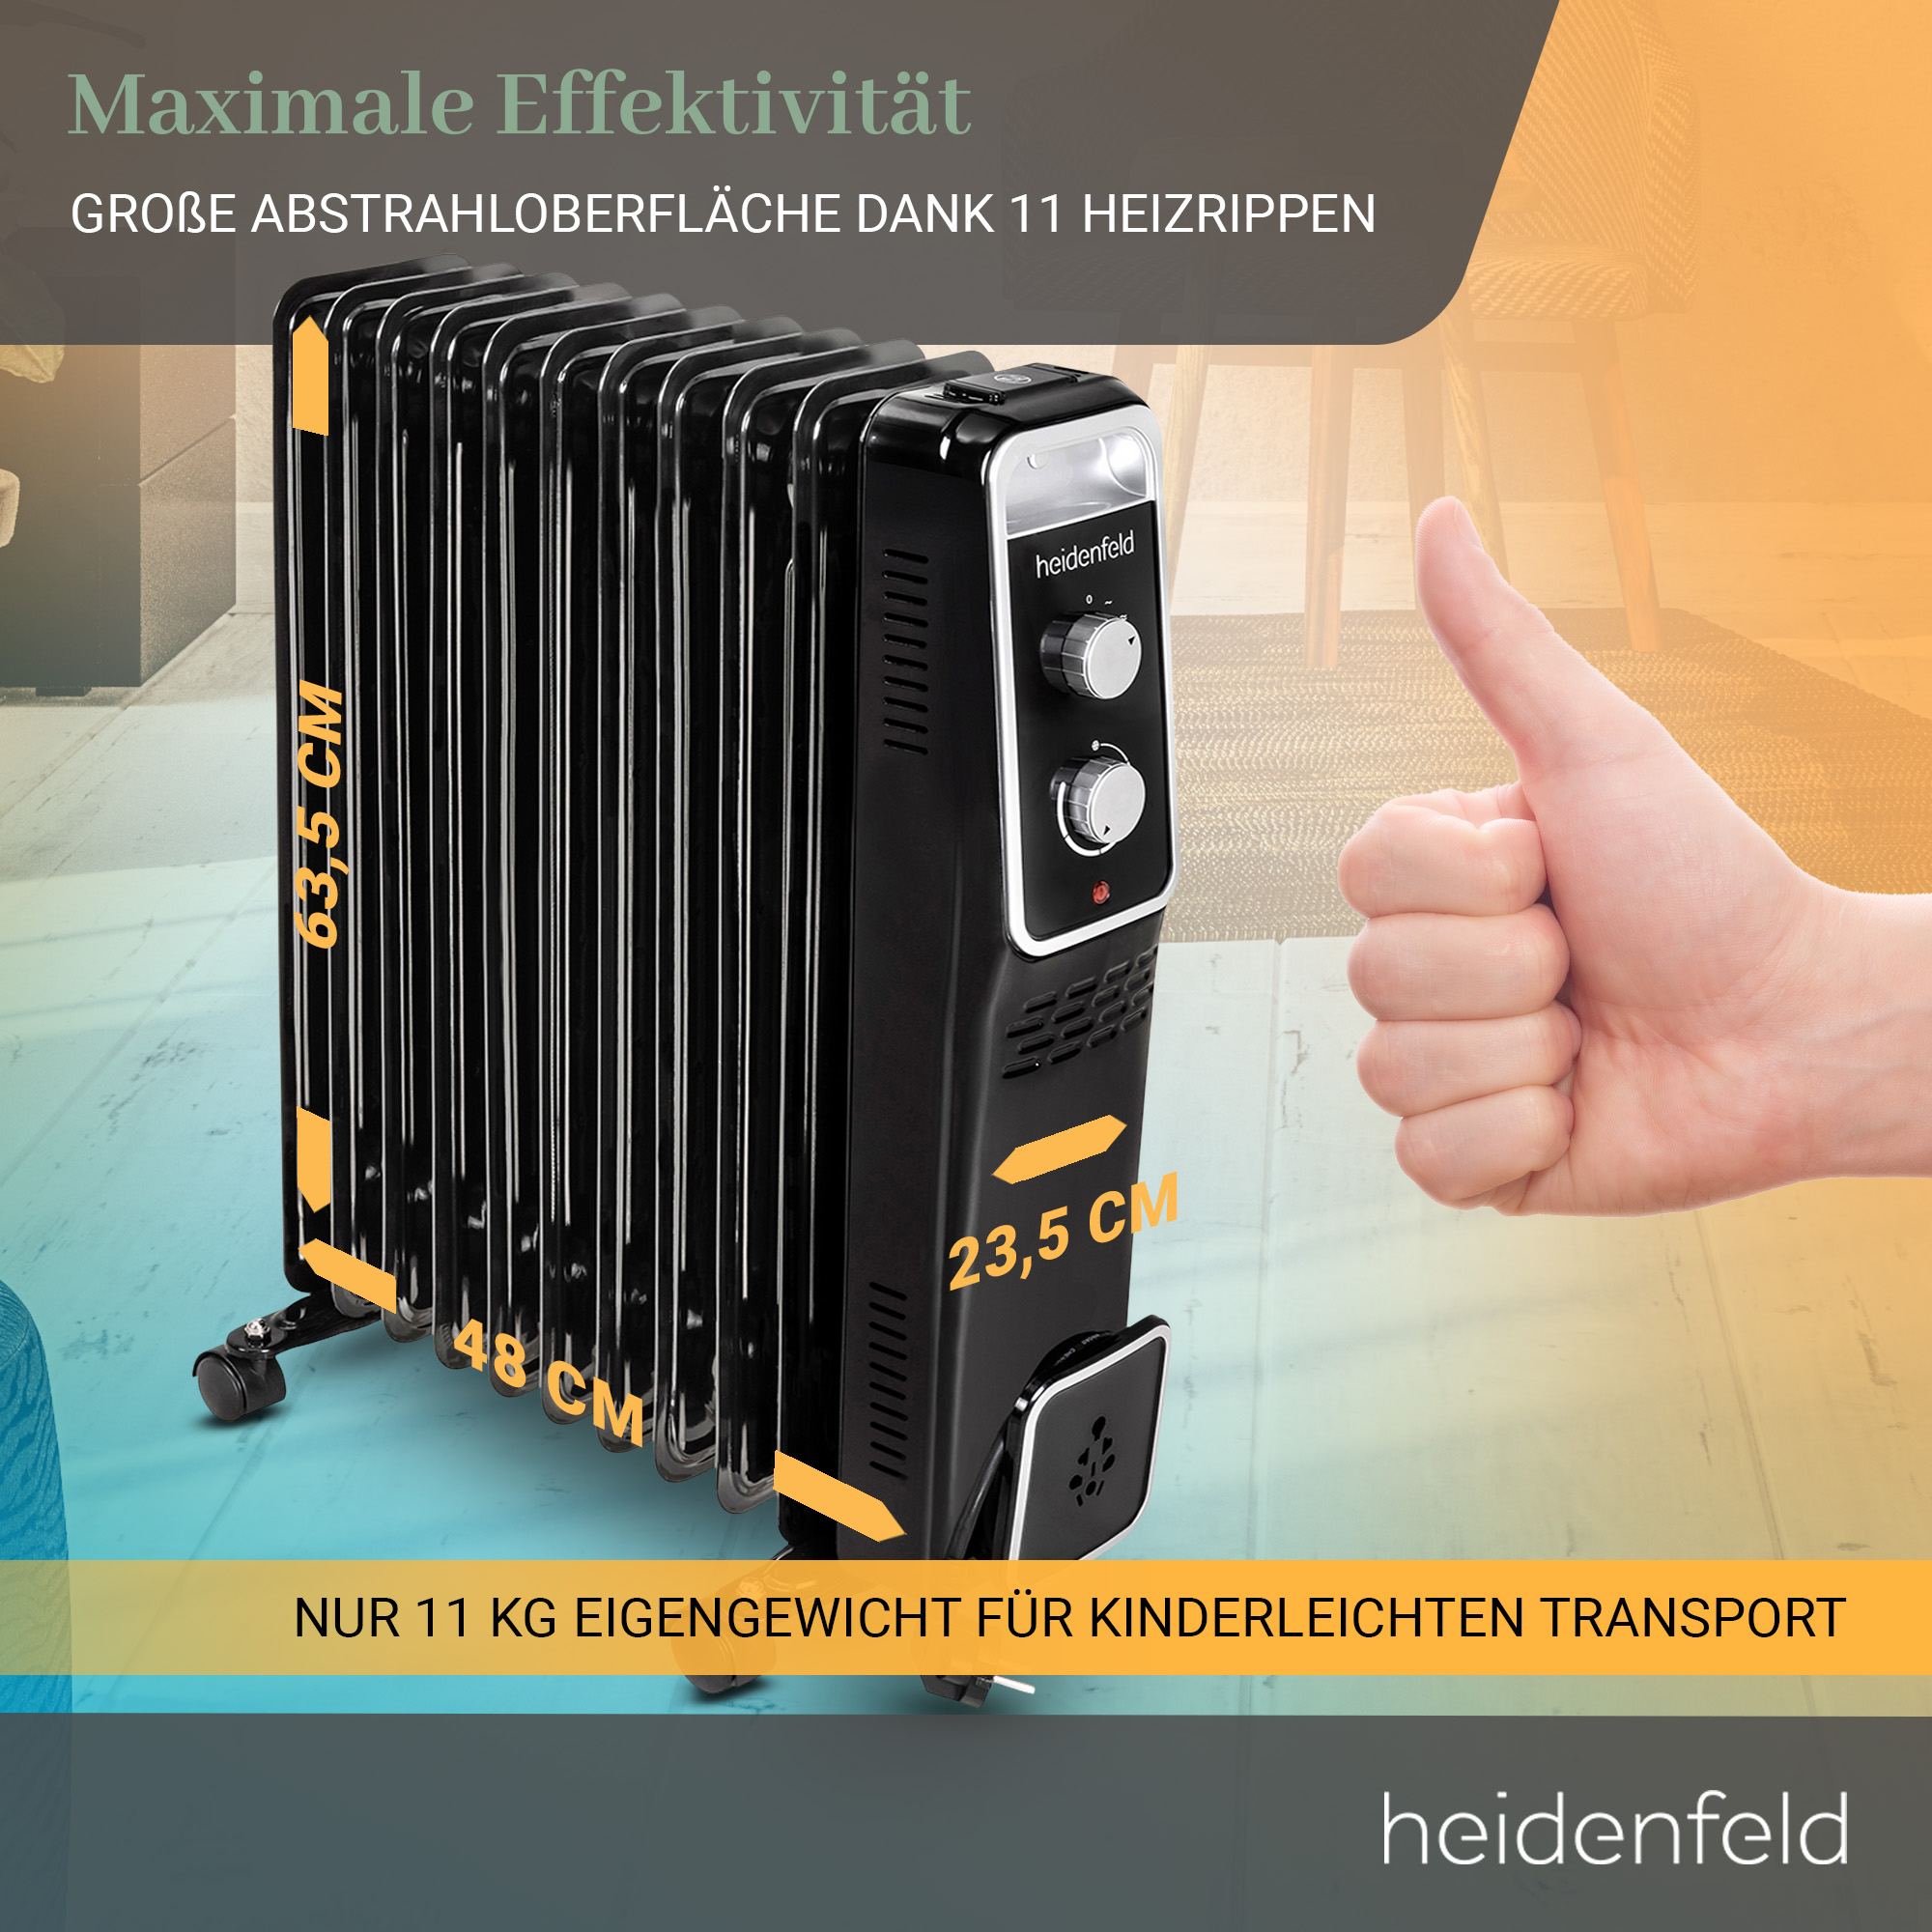 HEIDENFELD Heidenfeld Ölradiator Thermostat, ÖR100, (2500 stufenweise Ölradiator Watt, Regulierung 1000-2500 Watt)